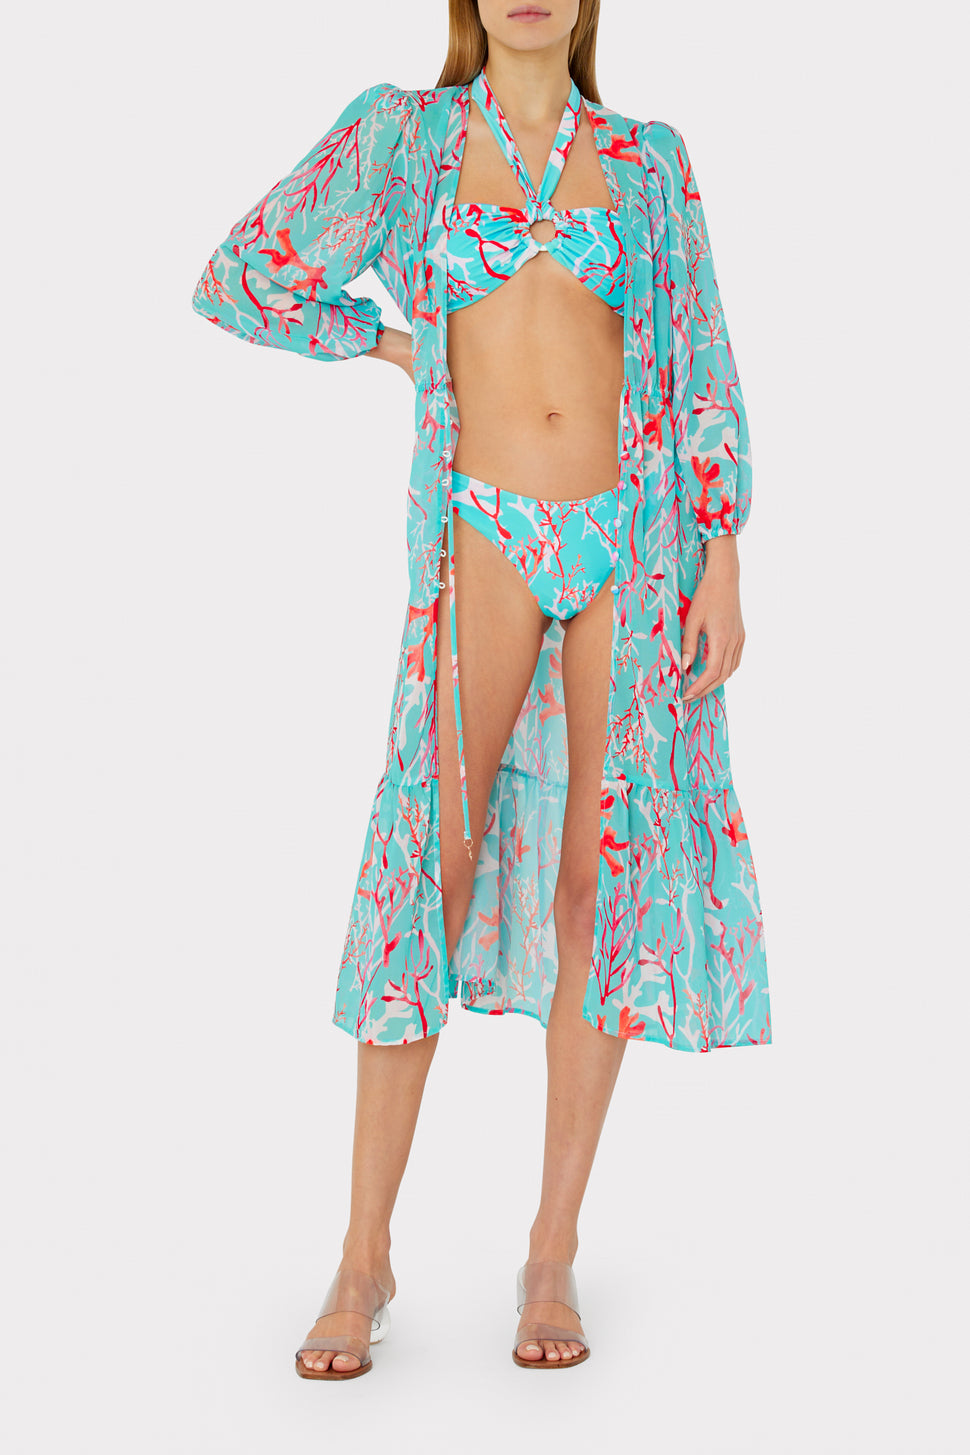 | Coral Sleeve Dress Fiona Marine Midi Coverup MILLY Long Swim